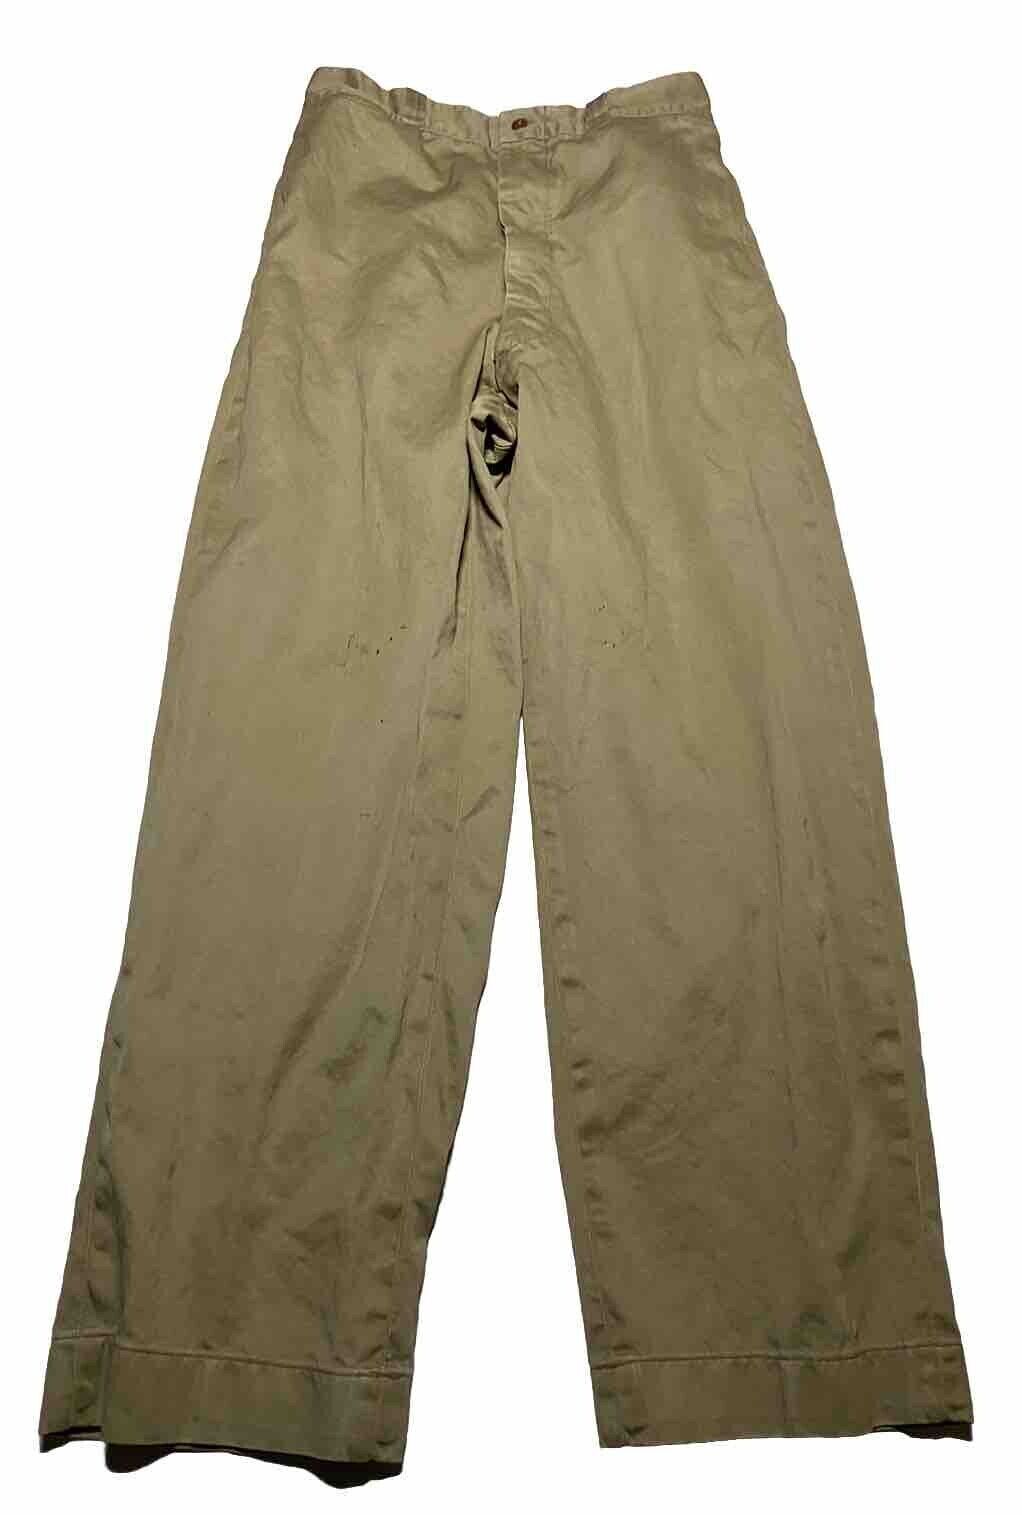 Vintage 50s Button Fly Military Khaki Chino Trousers Pants size 29x29 AL2